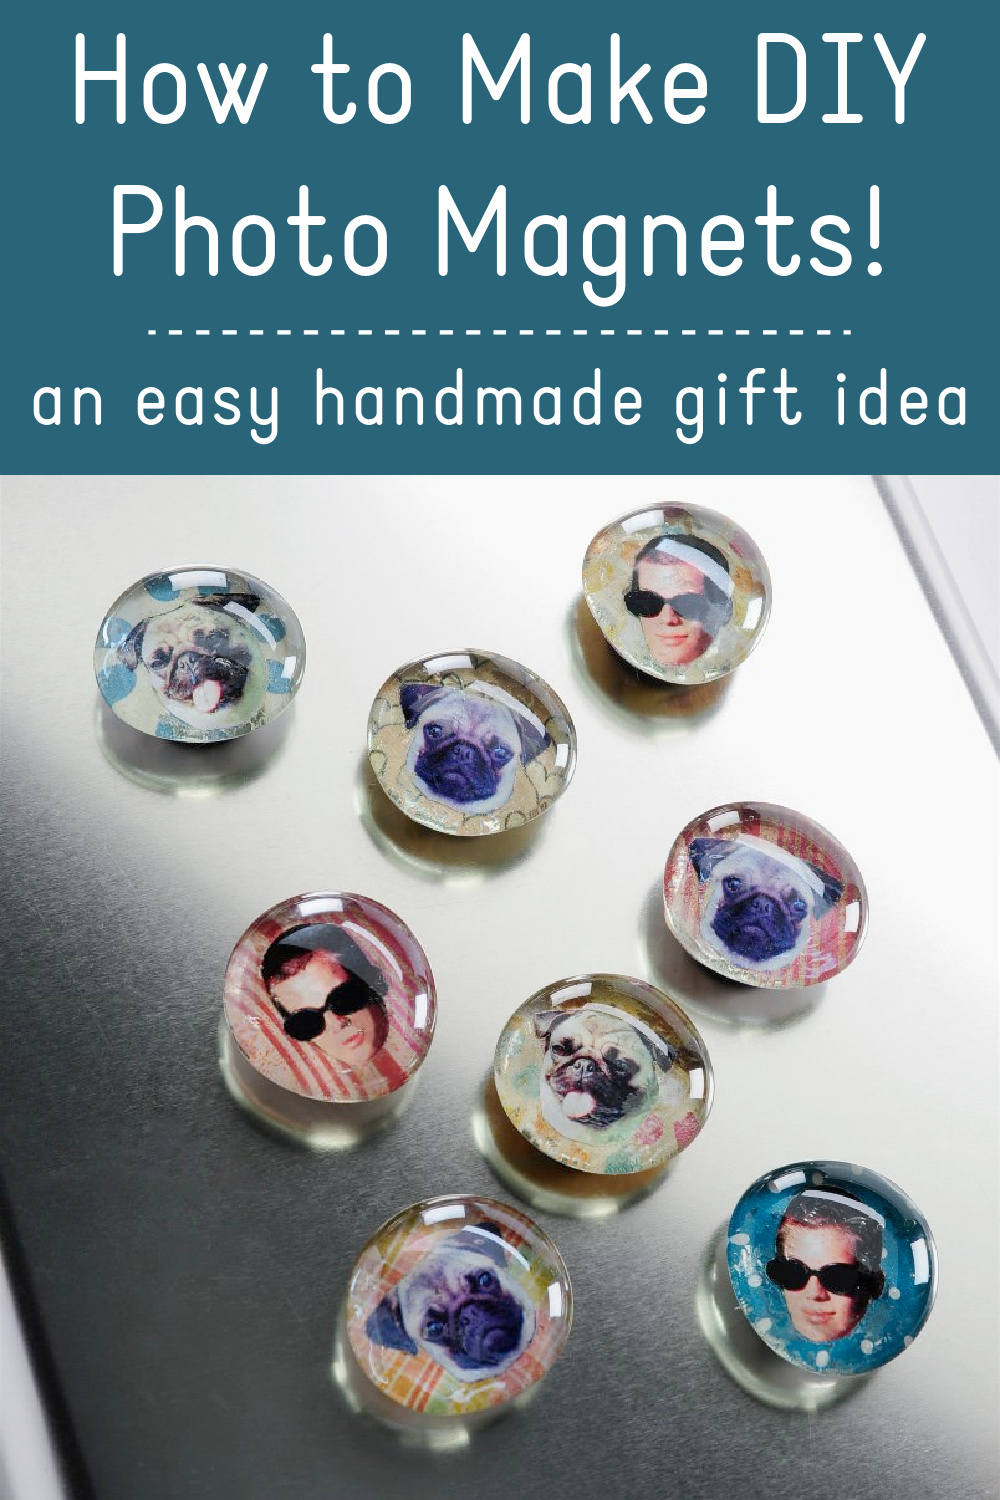 Make Glass Photo Magnets on the Cheap! - Mod Podge Rocks